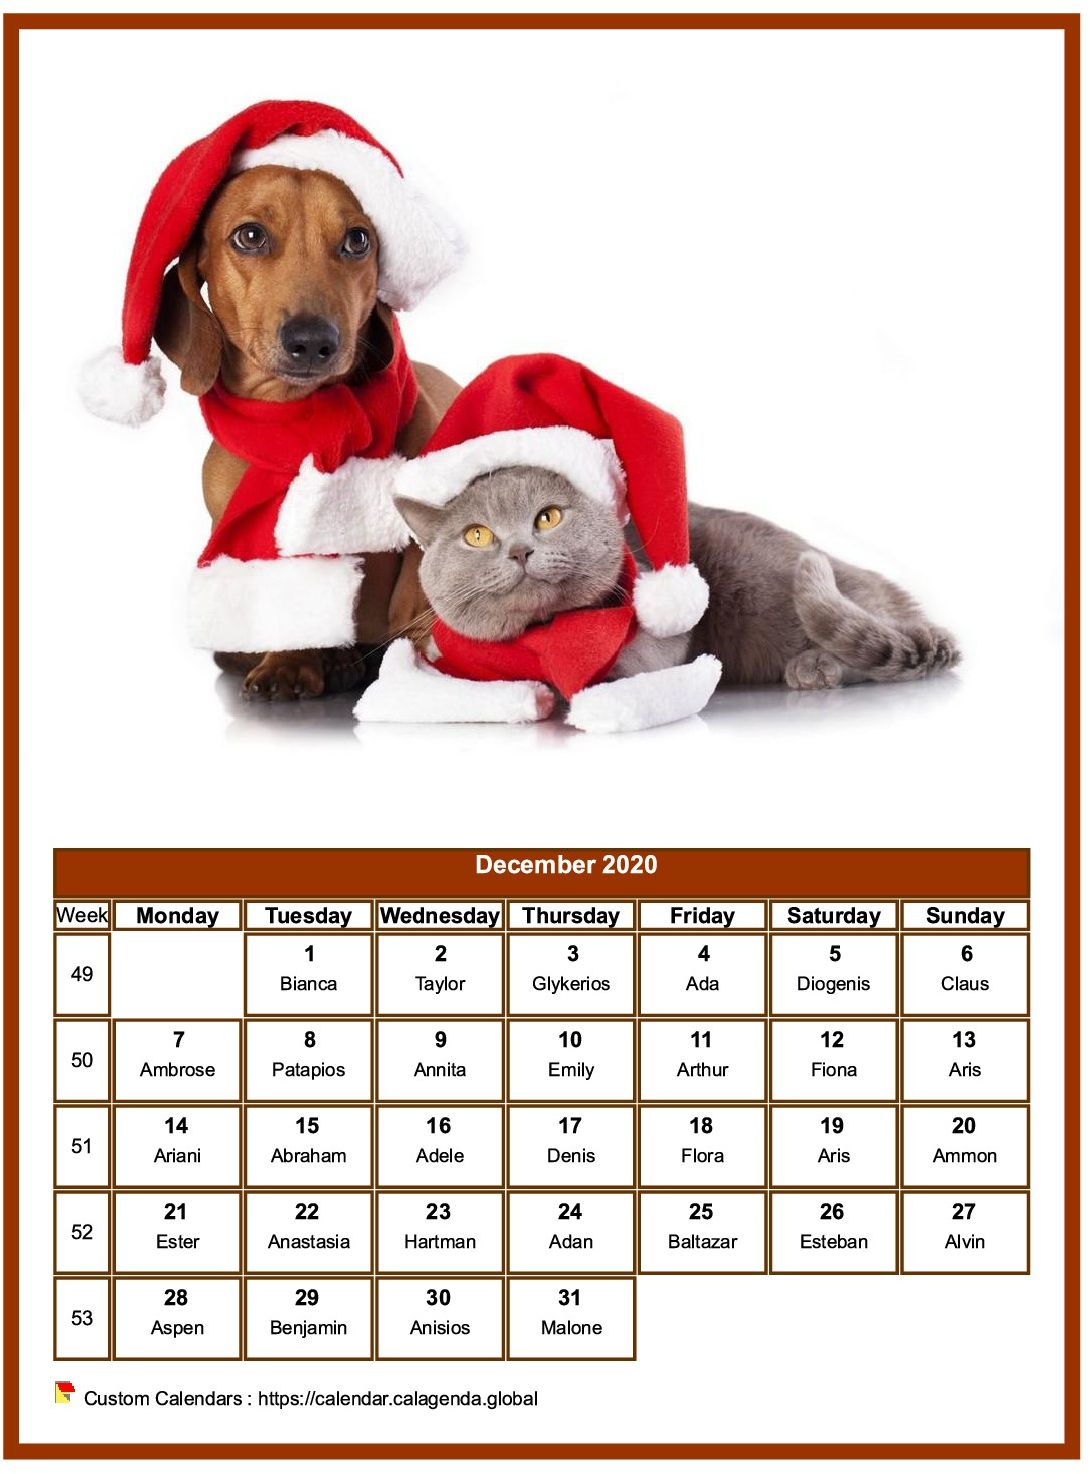 Calendar December 2020 dogs